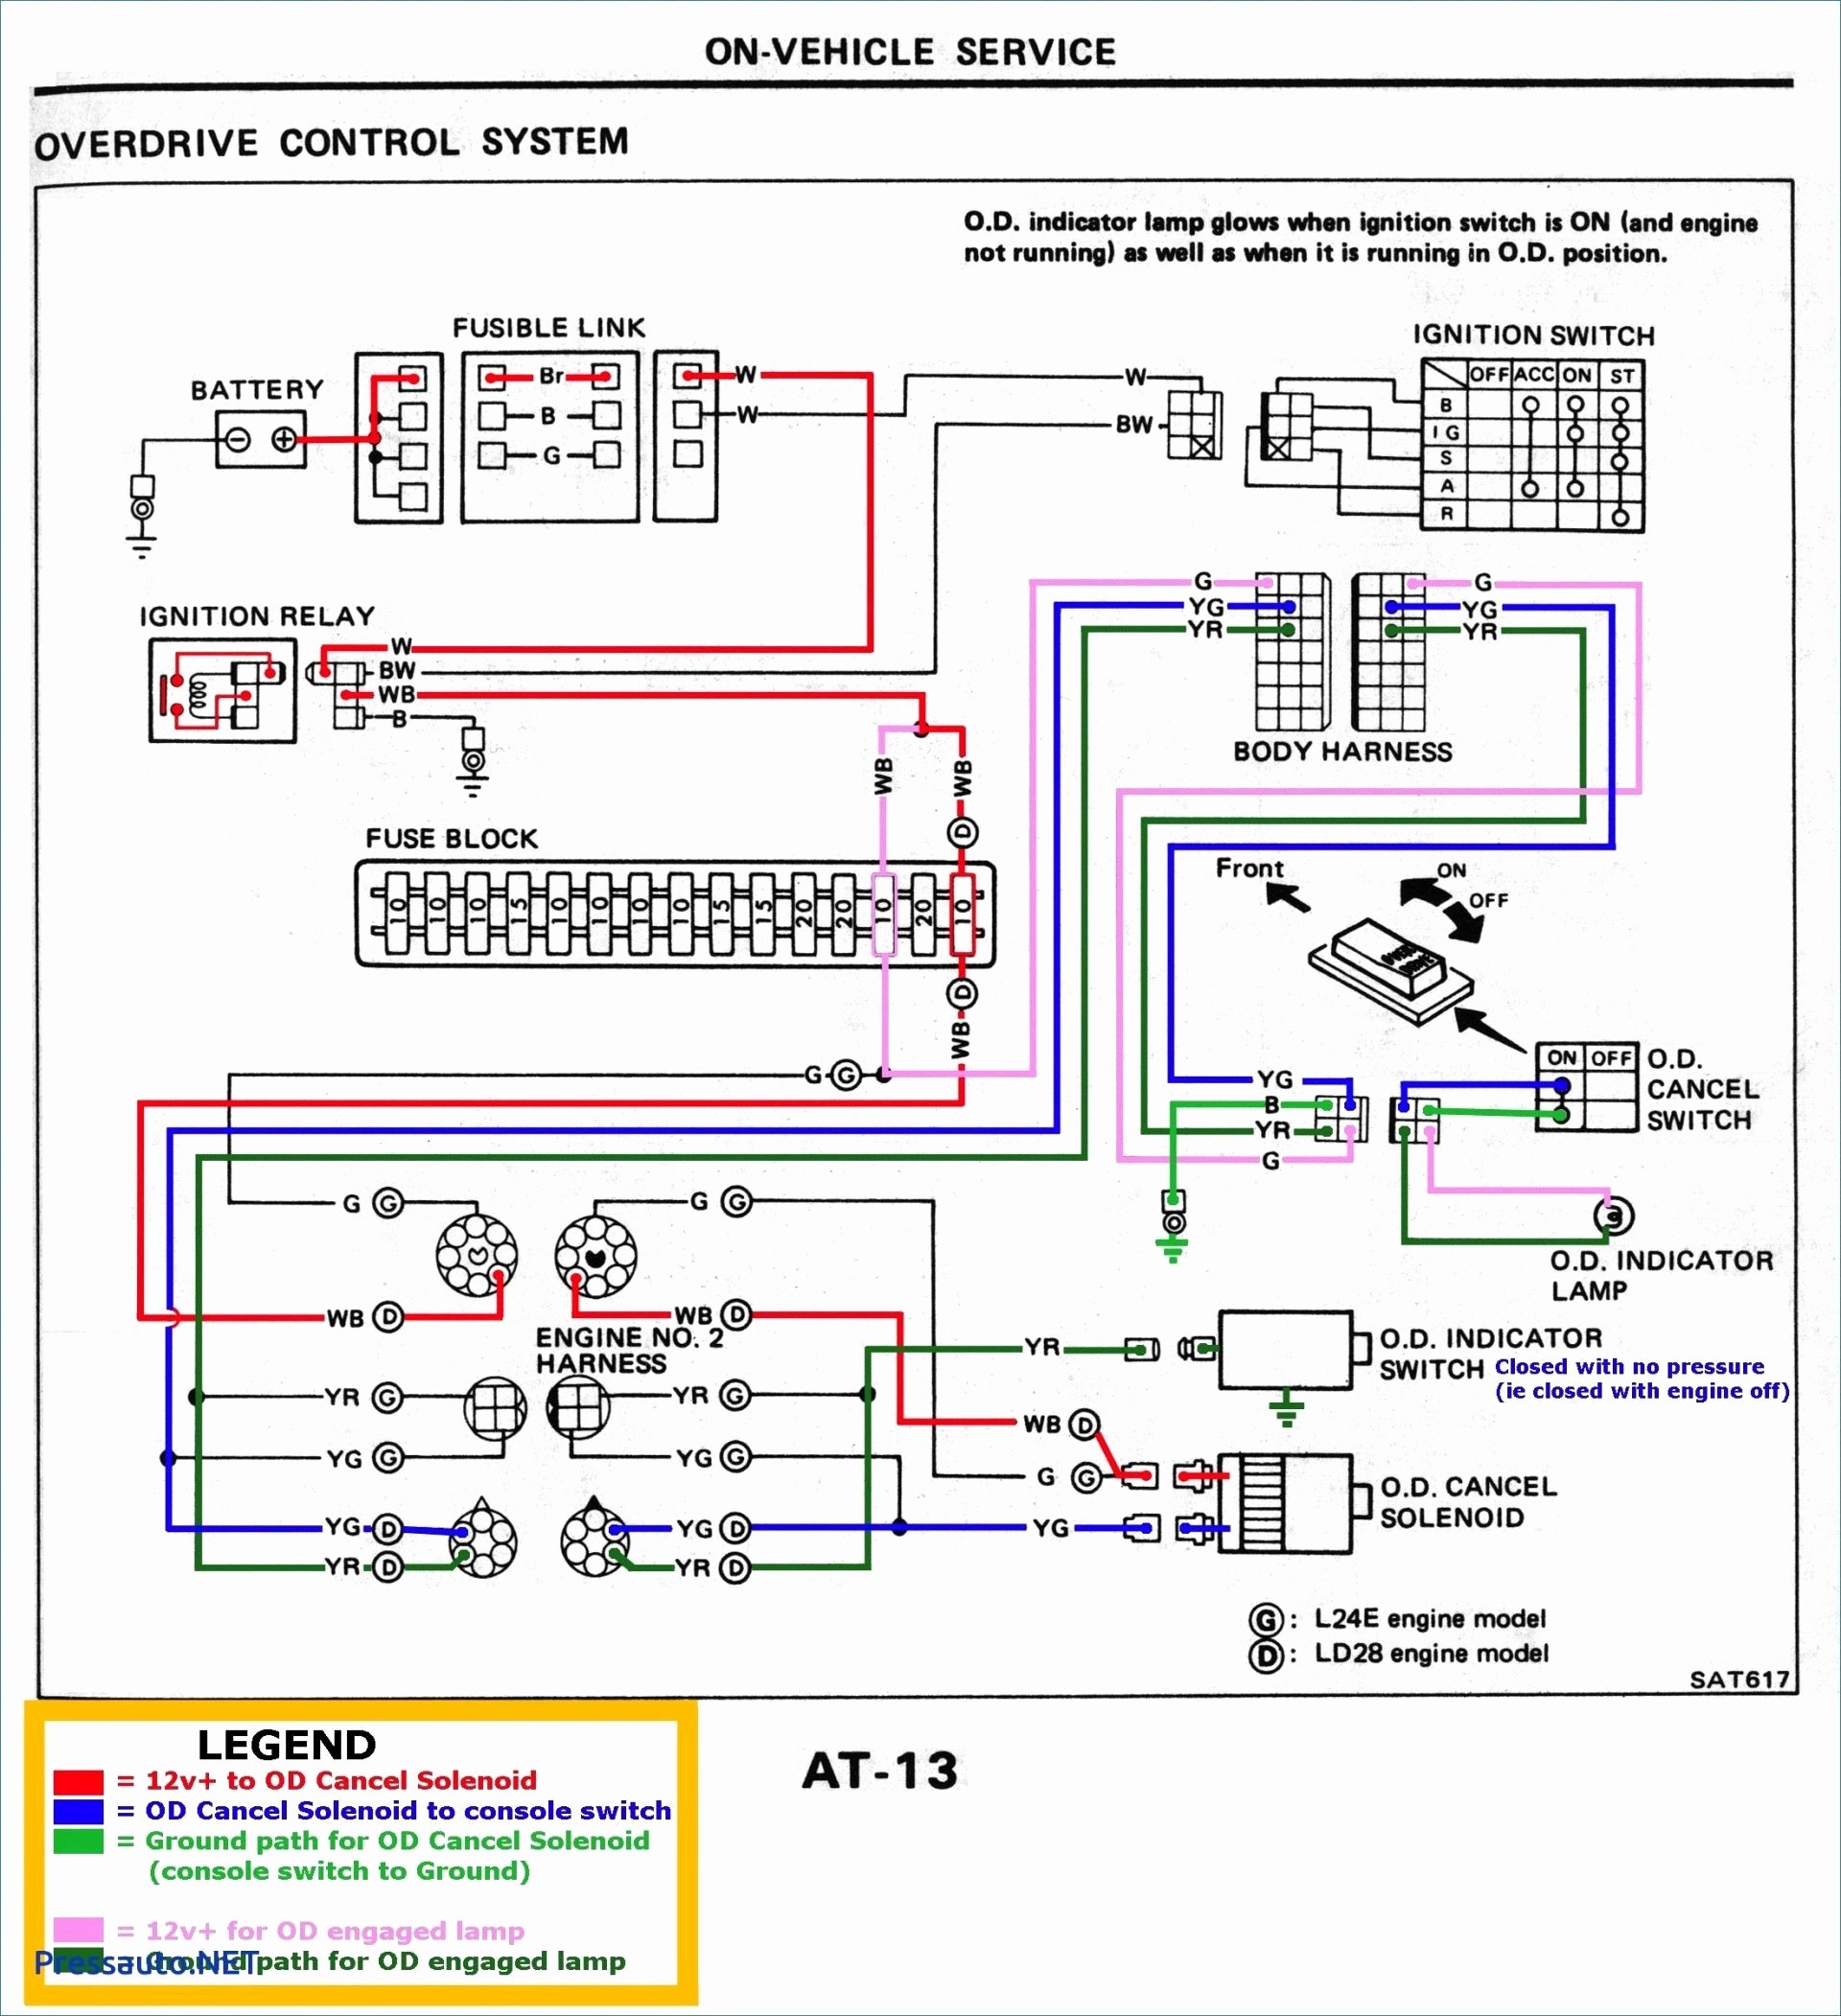 7 Pin Wiring Diagram Wiring Diagram for A 7 Way Trailer Plug Inspirational Chevy 7 Pin Of 7 Pin Wiring Diagram